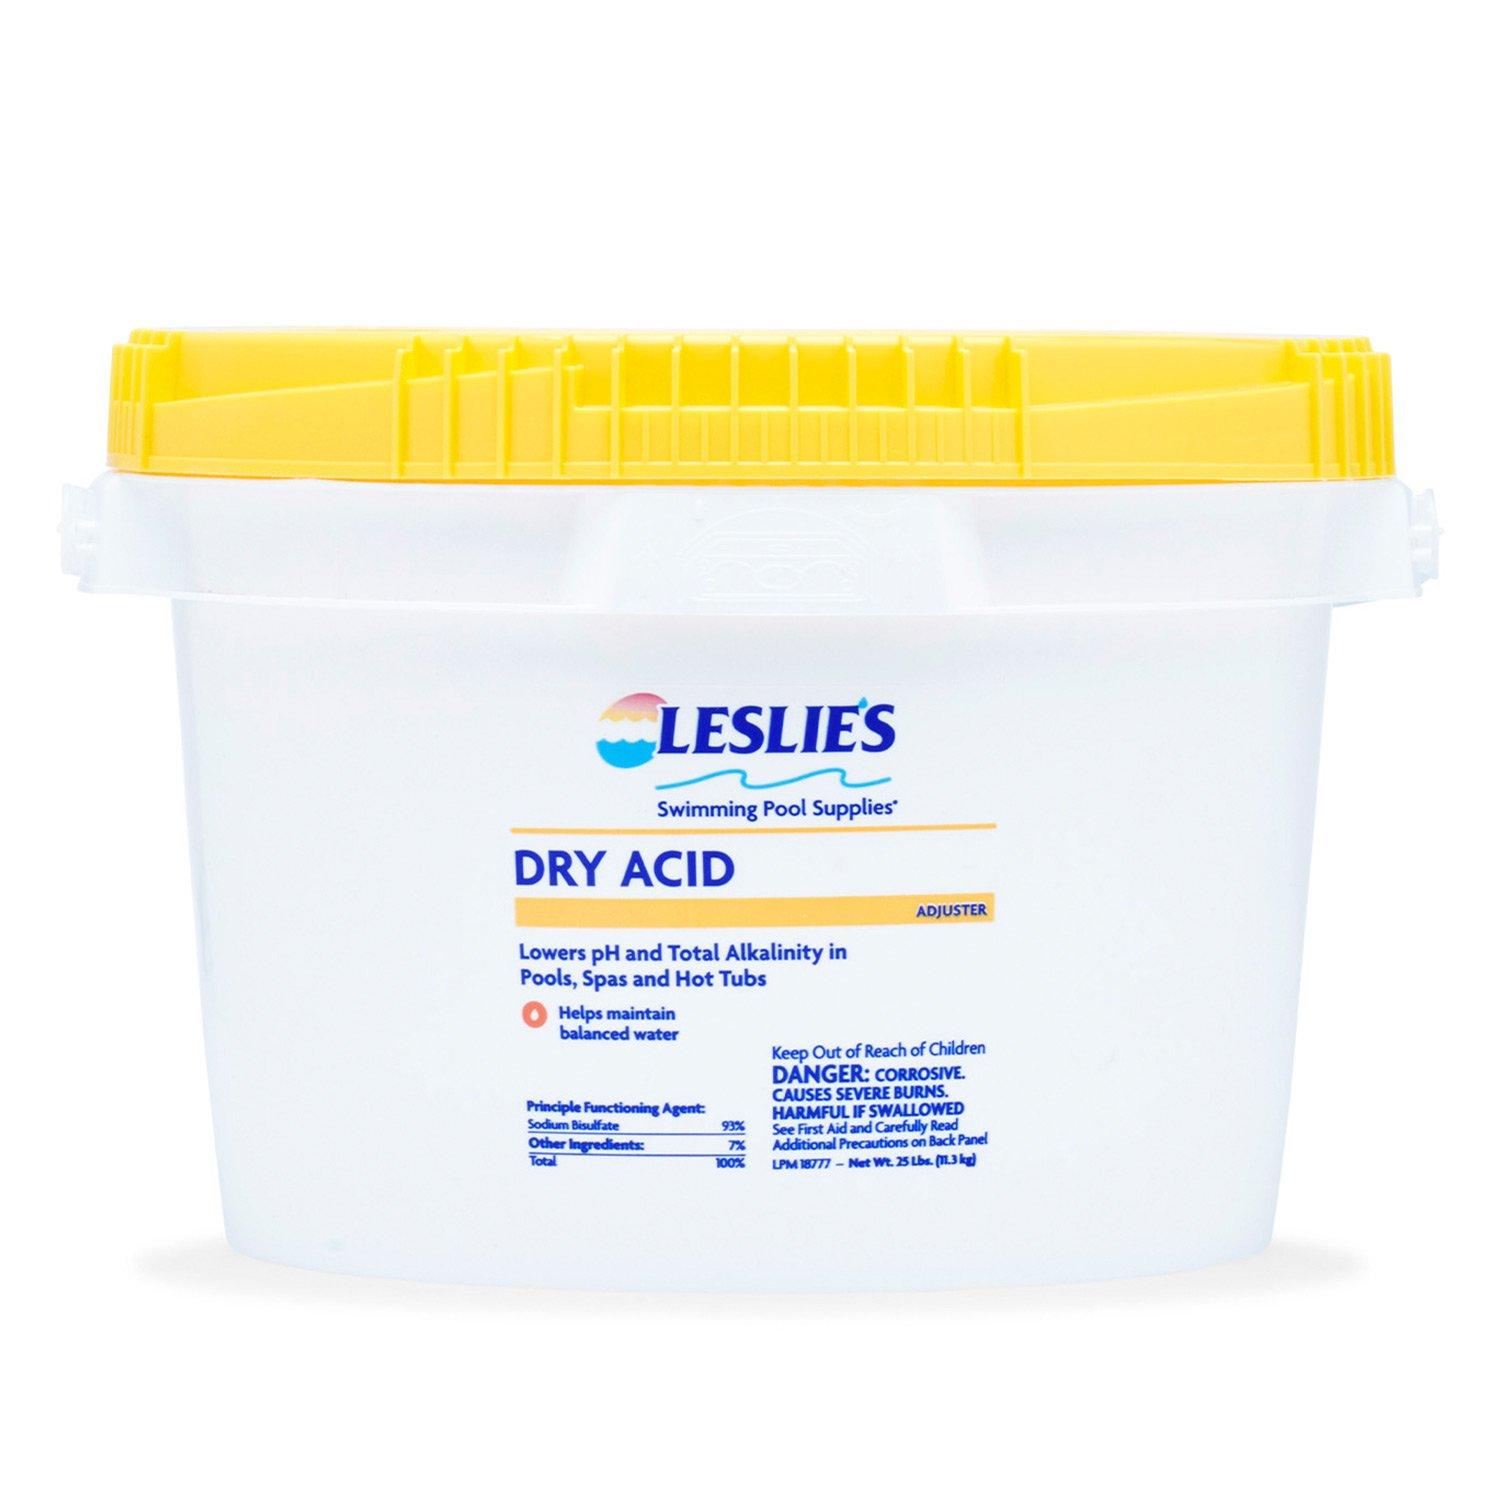 Leslie's Dry Acid pH Reducer